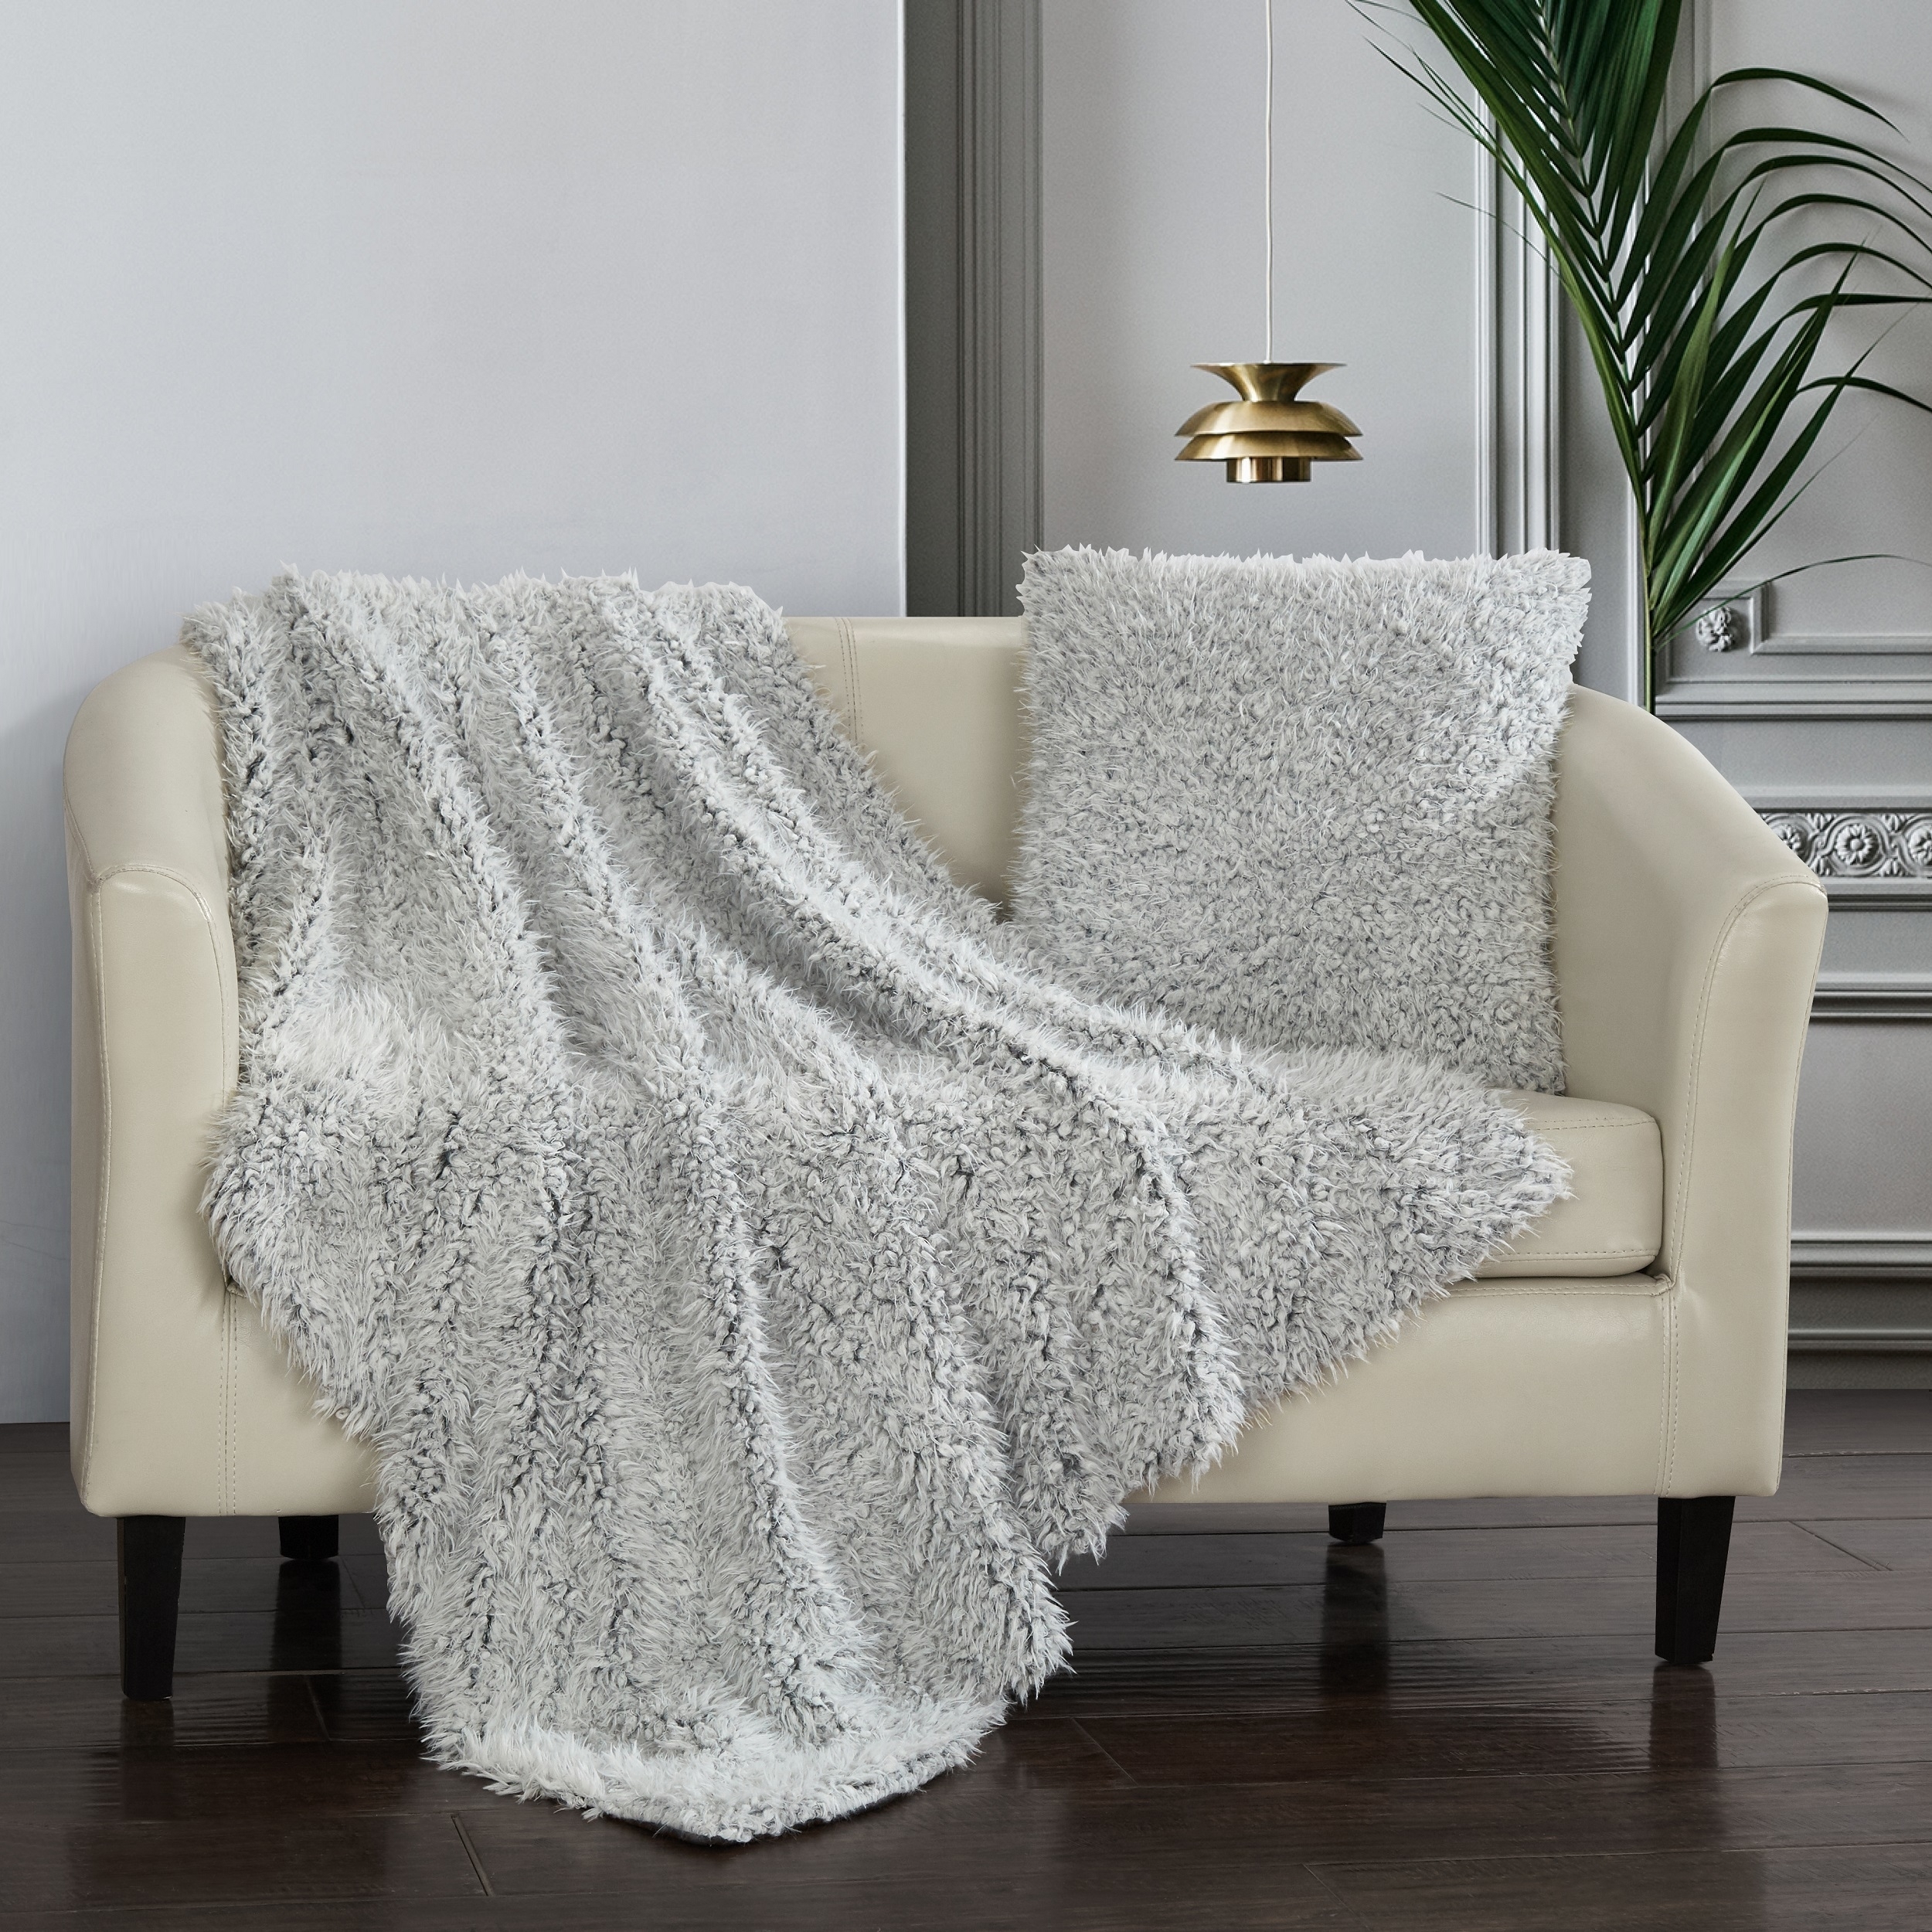 Heide Throw Blanket 2 Piece Set Cozy Super Soft Ultra Plush Shaggy Lion Faux Fur Micromink With Decorative Throw Pillow - Mauve